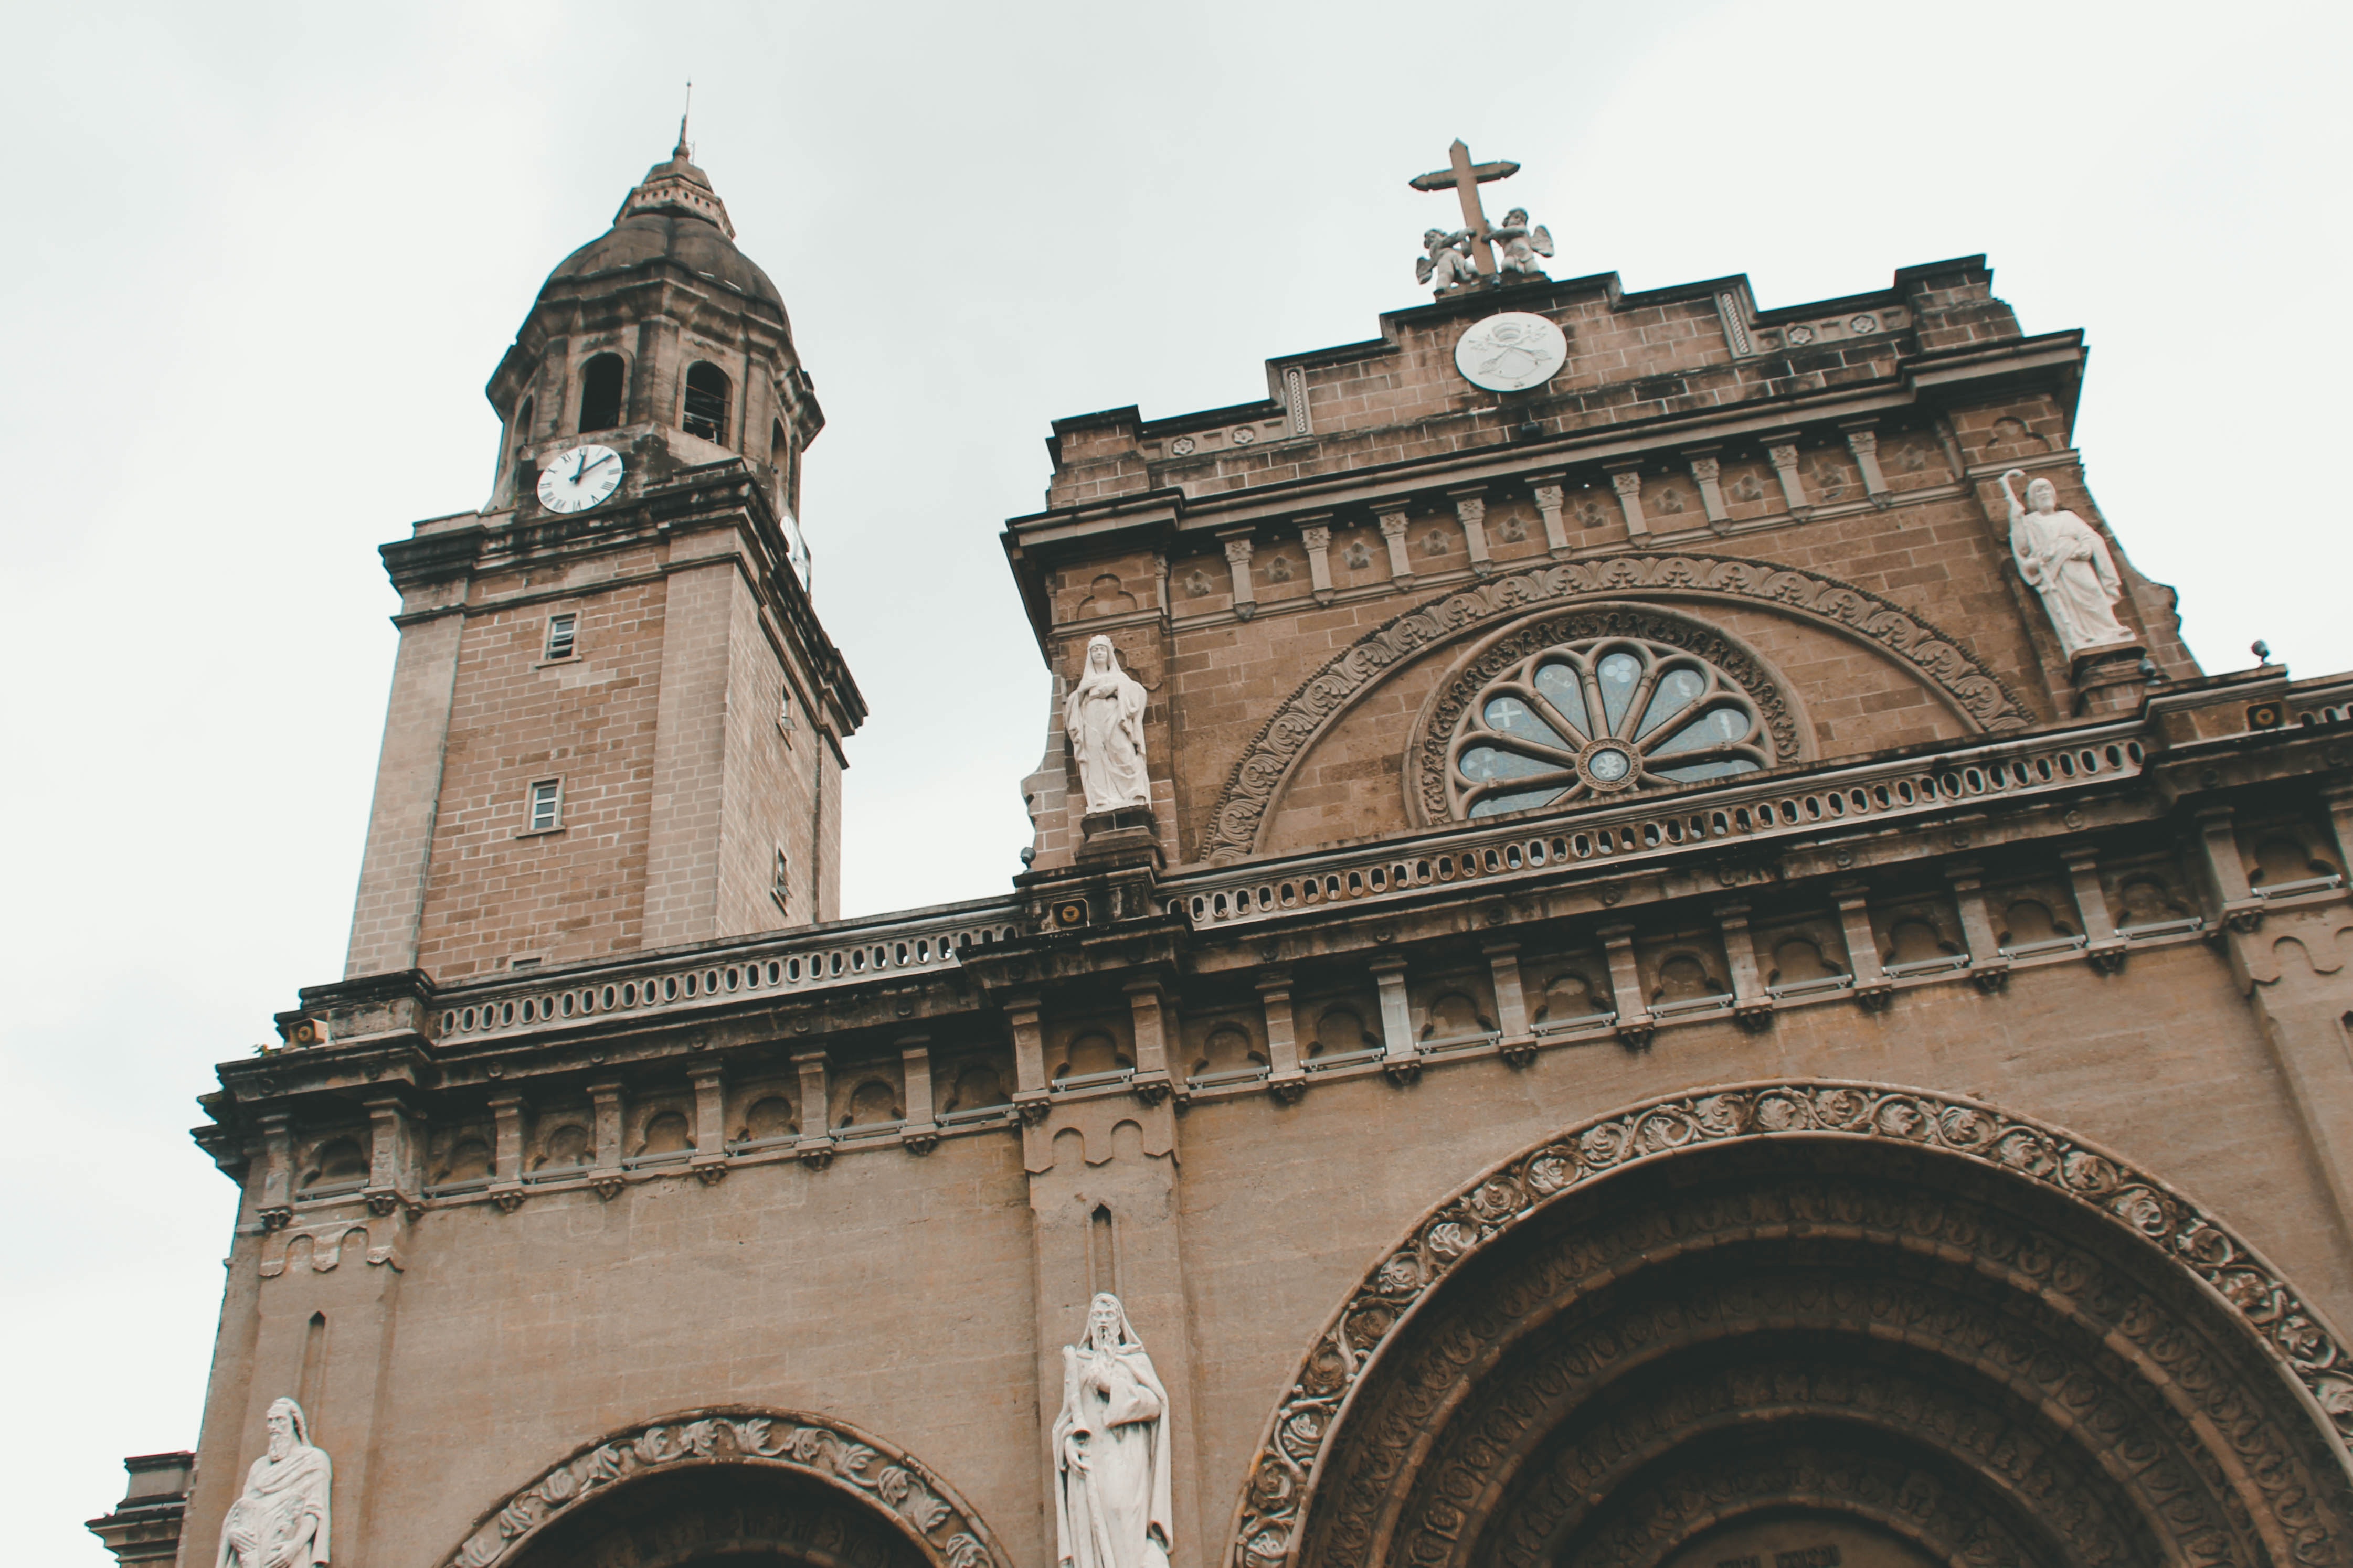 Untouristing Manila Cathedral